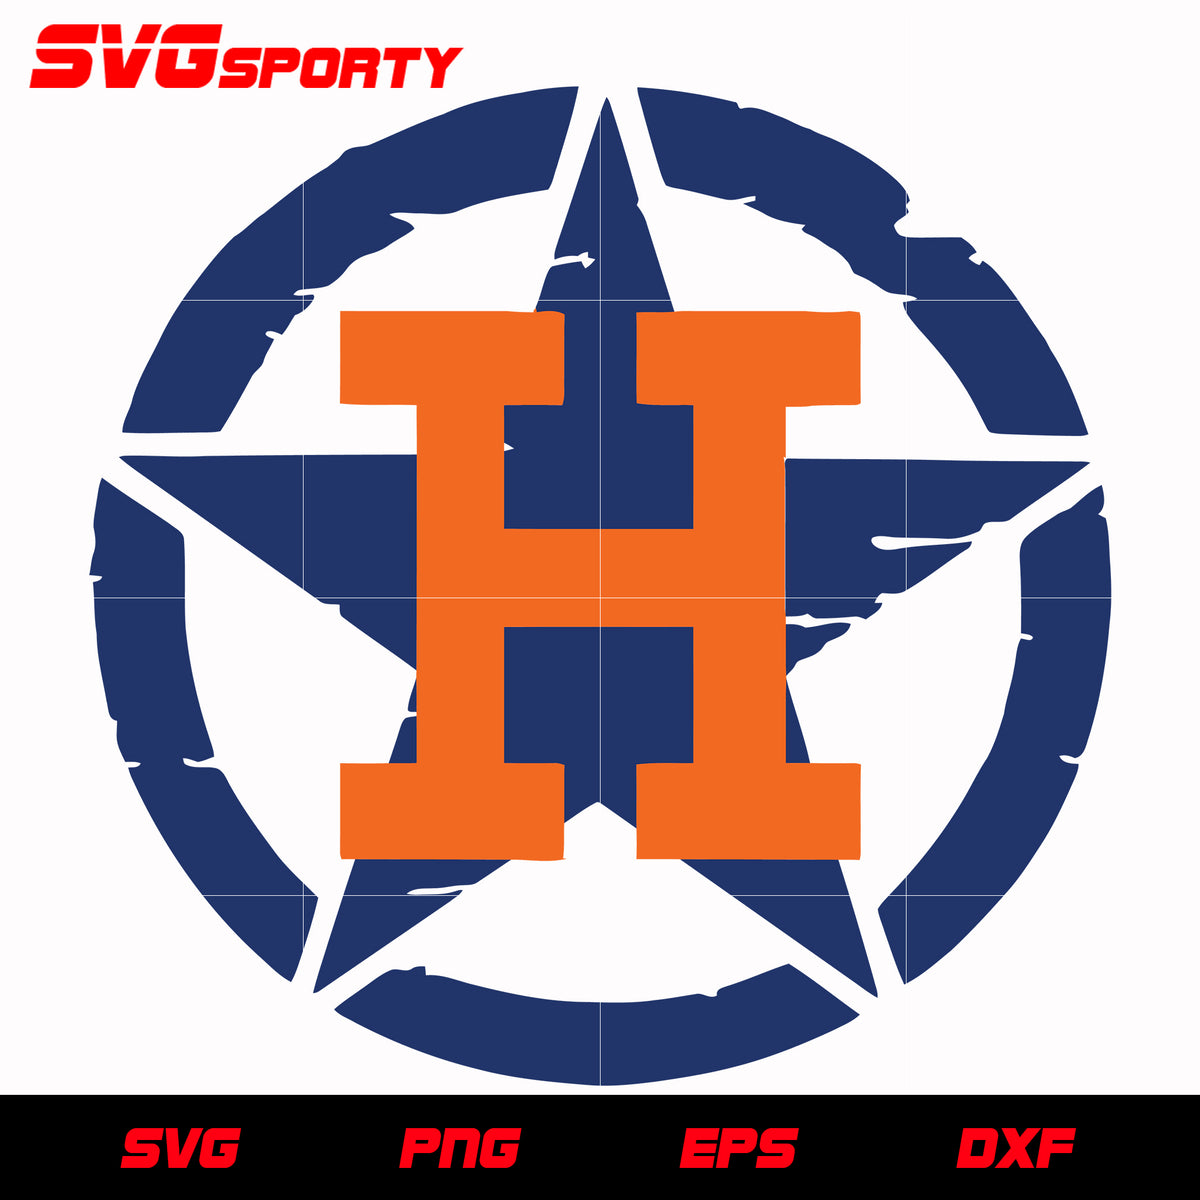 MLB Houston Astros SVG, SVG Files For Silhouette, Houston Astros